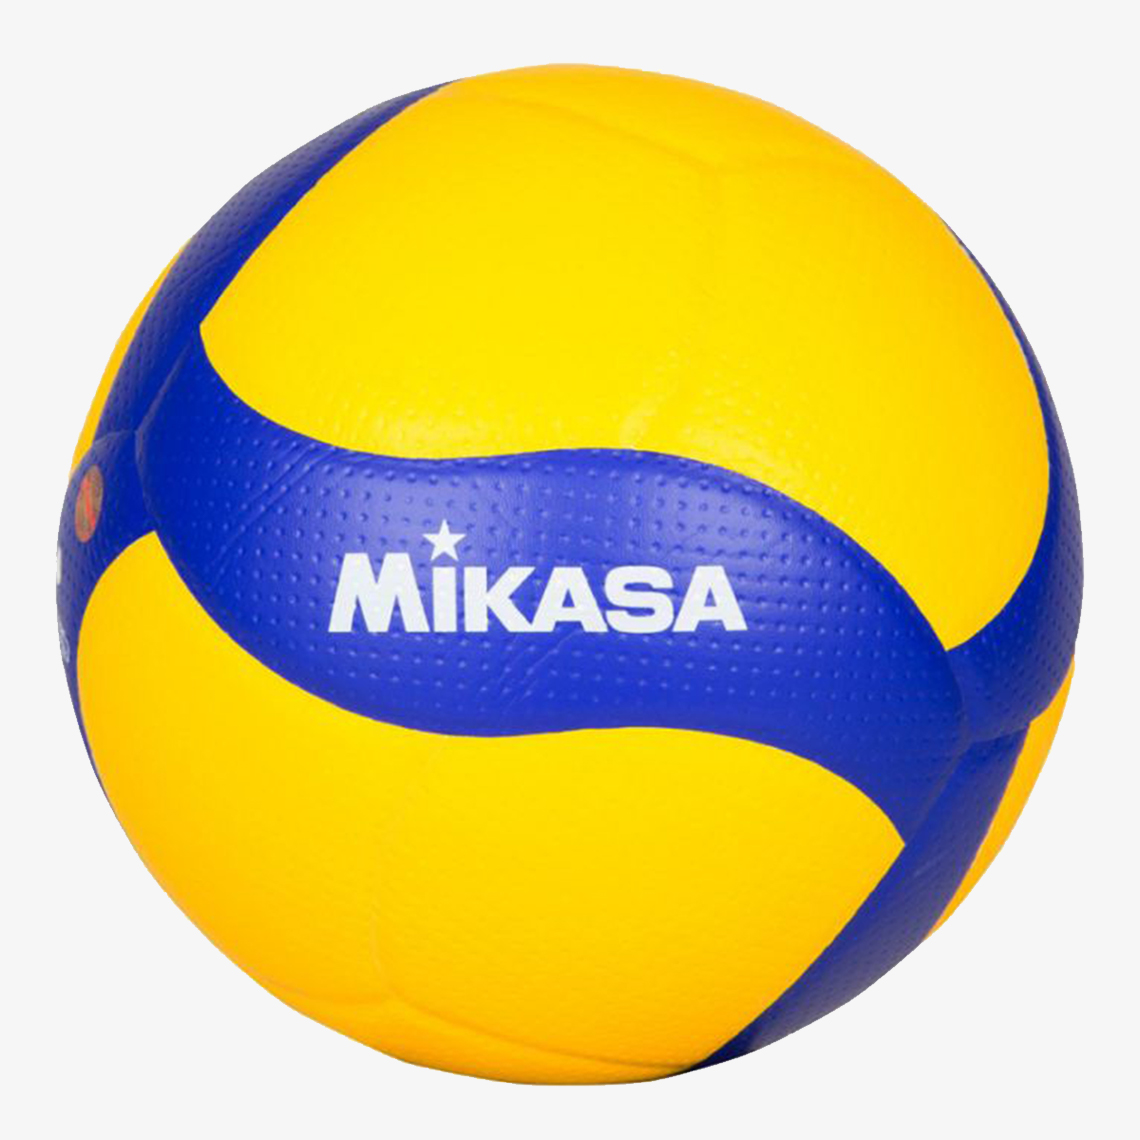 Mikasa Volleyball 